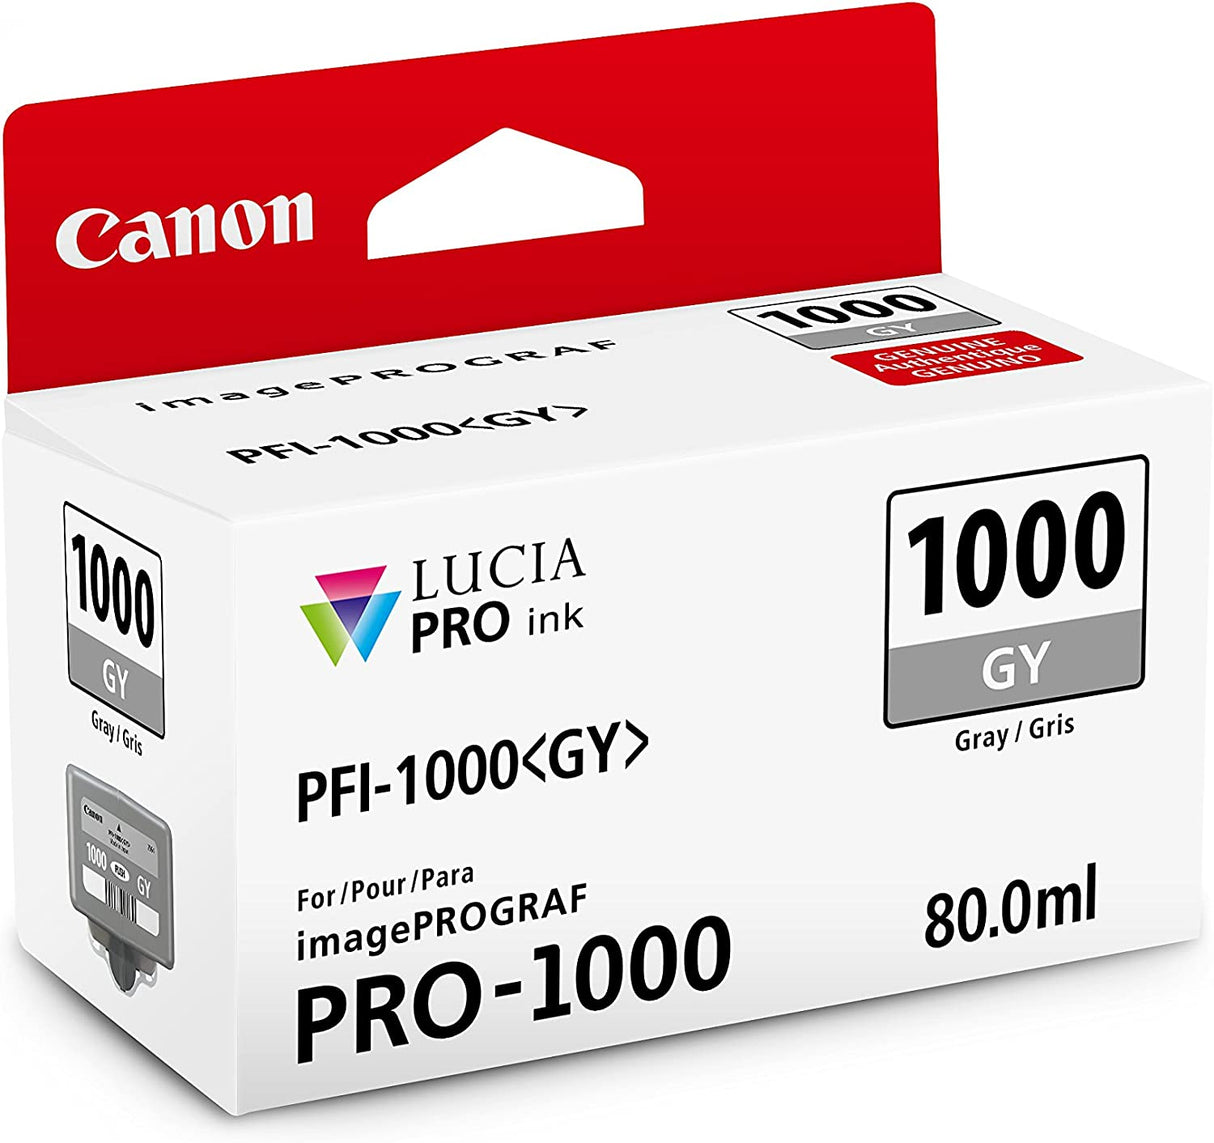 CanonInk Lucia PRO PFI-1000 Gray Individual Ink Tank